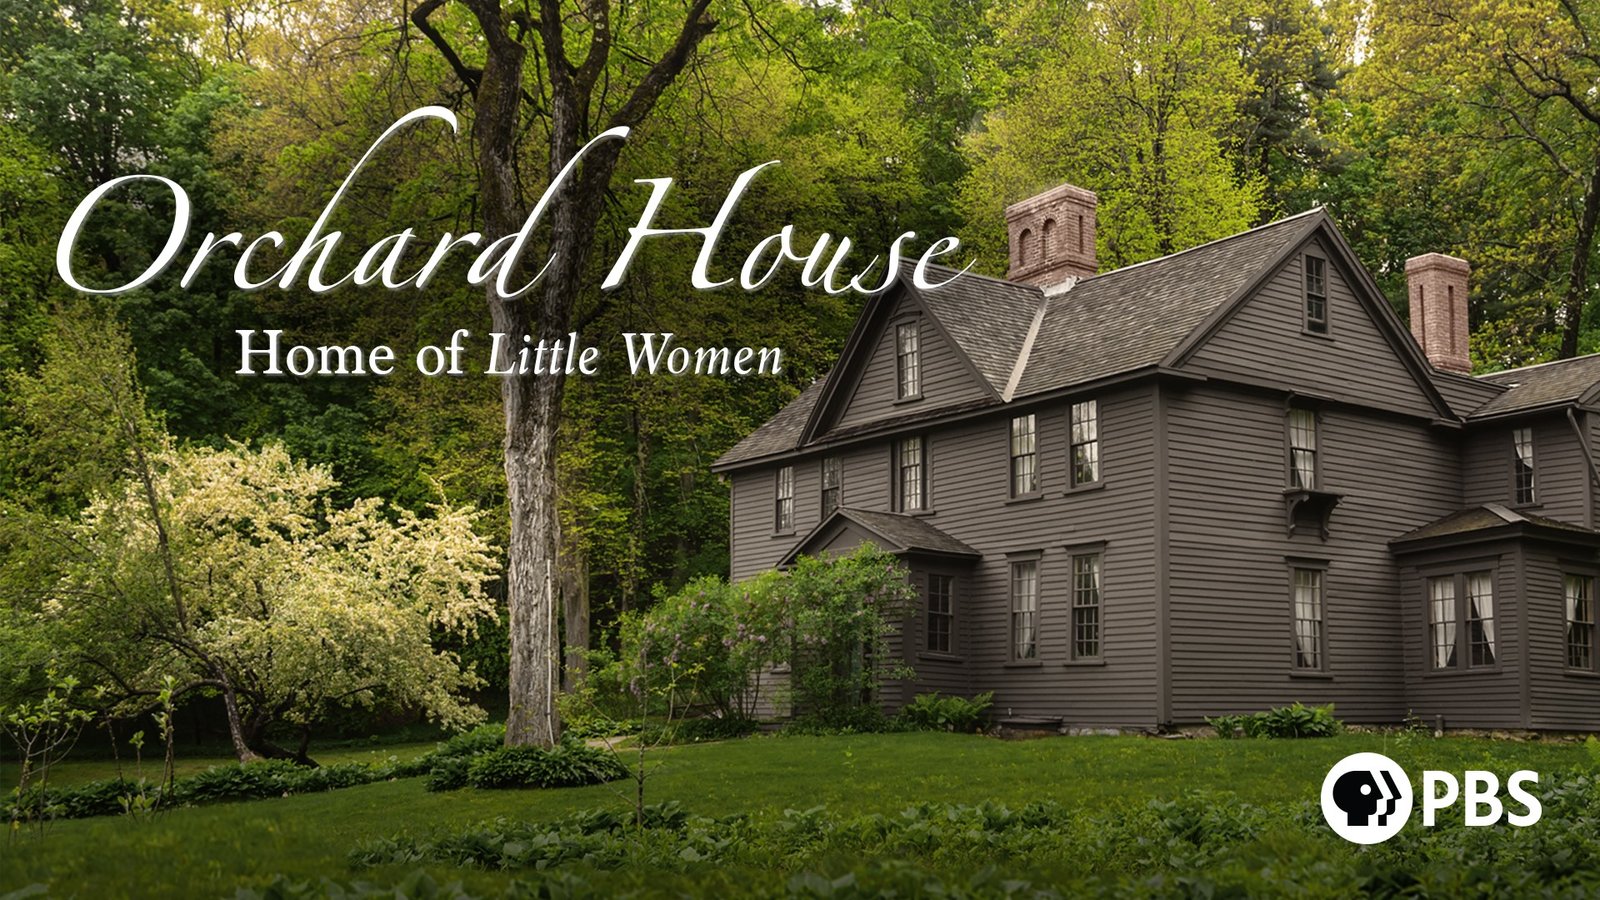 little women orchard house